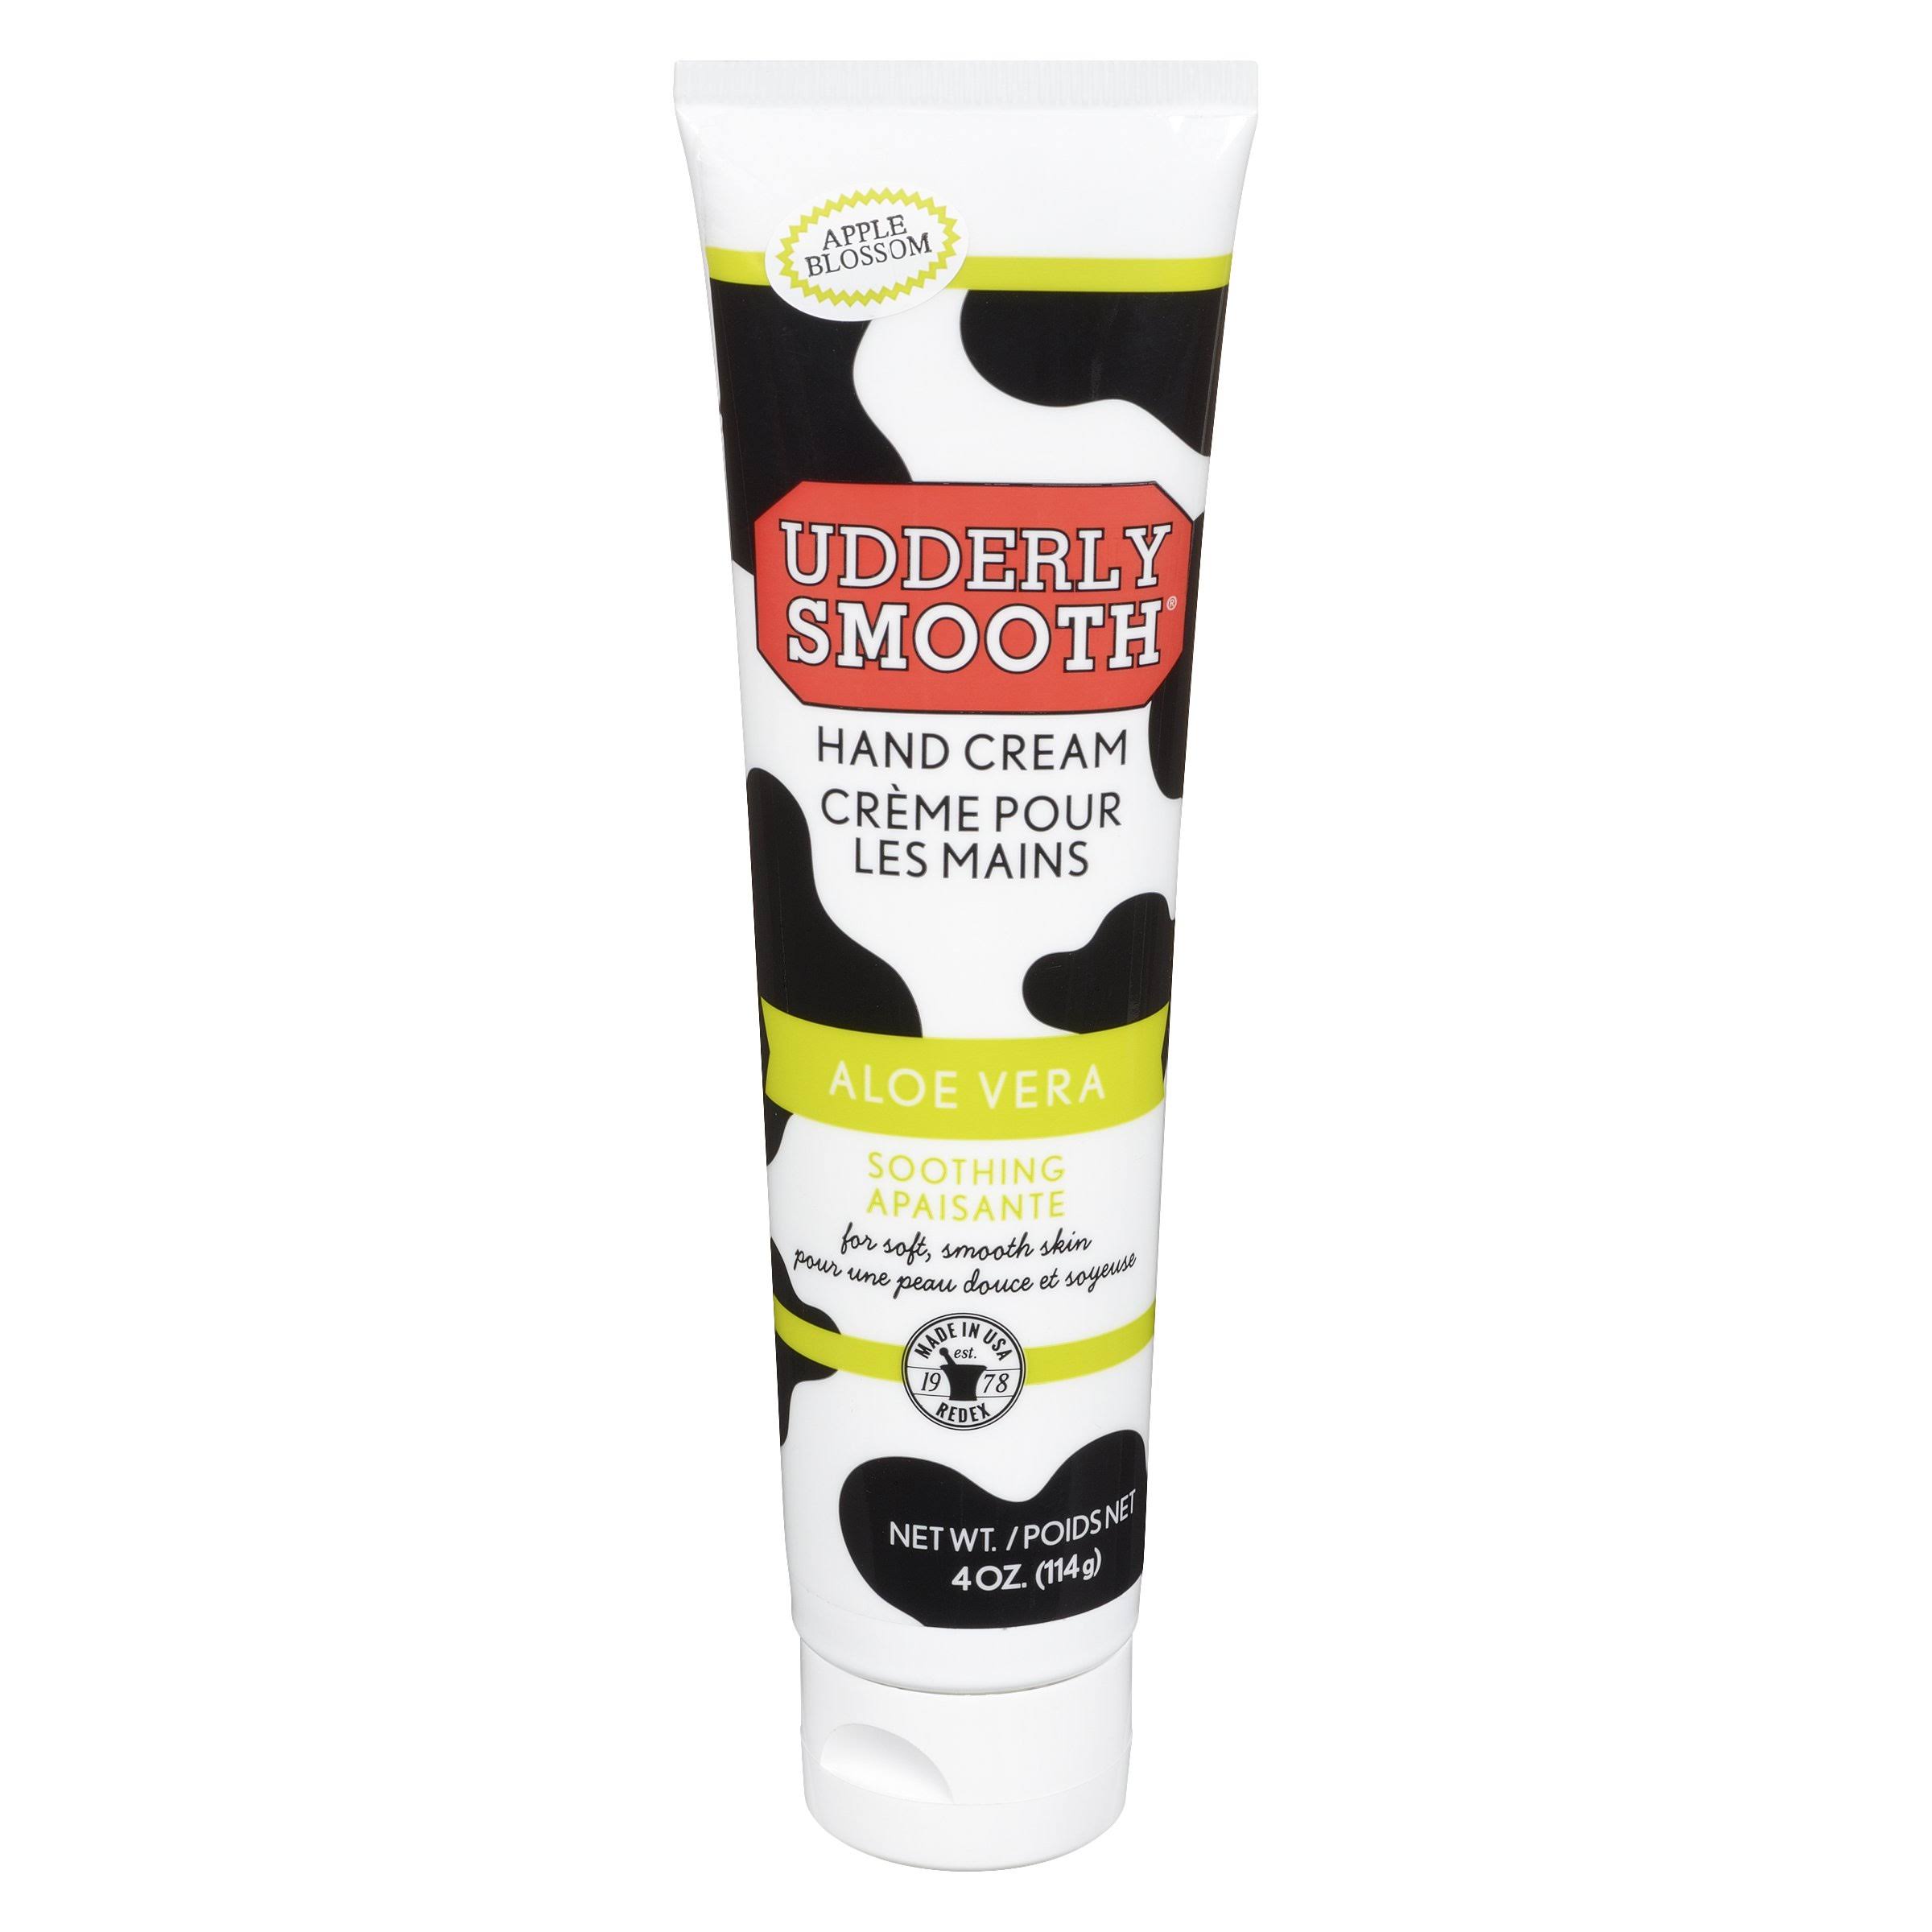 Udderly Smooth Hand Cream - Aloe Vera - 114g